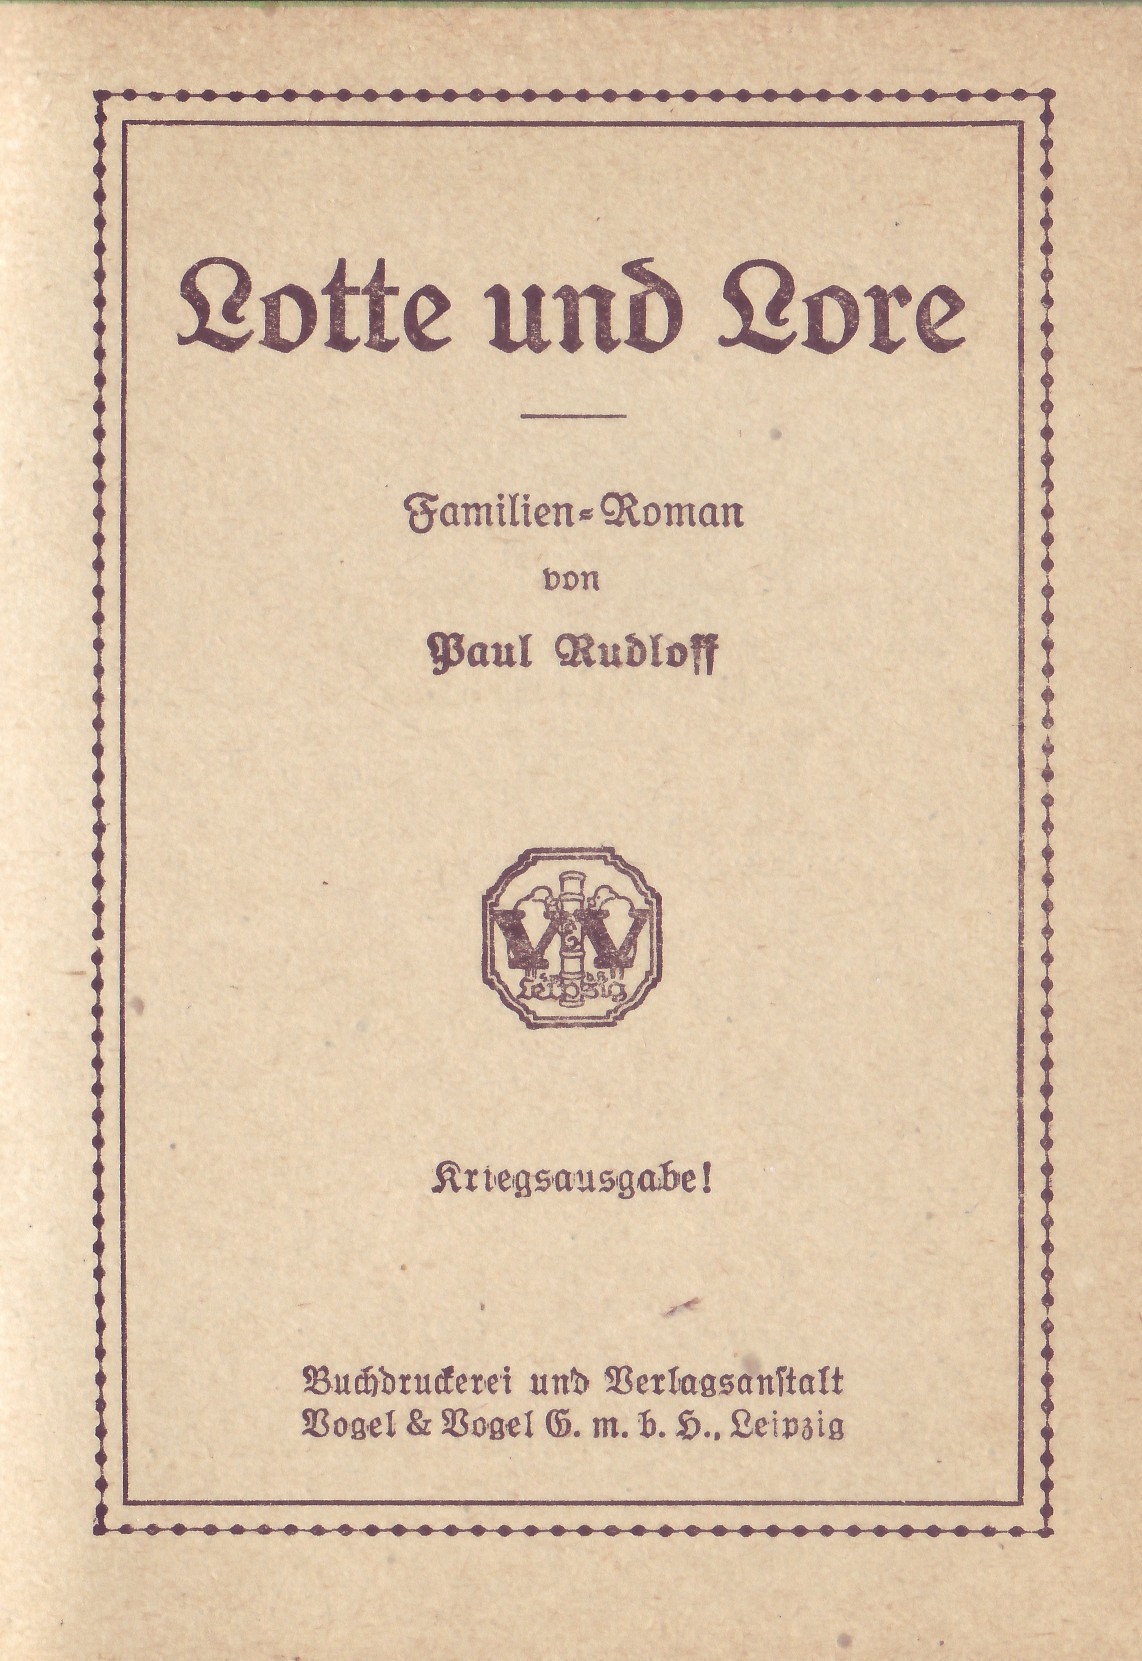 Lotte und Lore (Kulturverein Guntersblum CC BY-NC-SA)